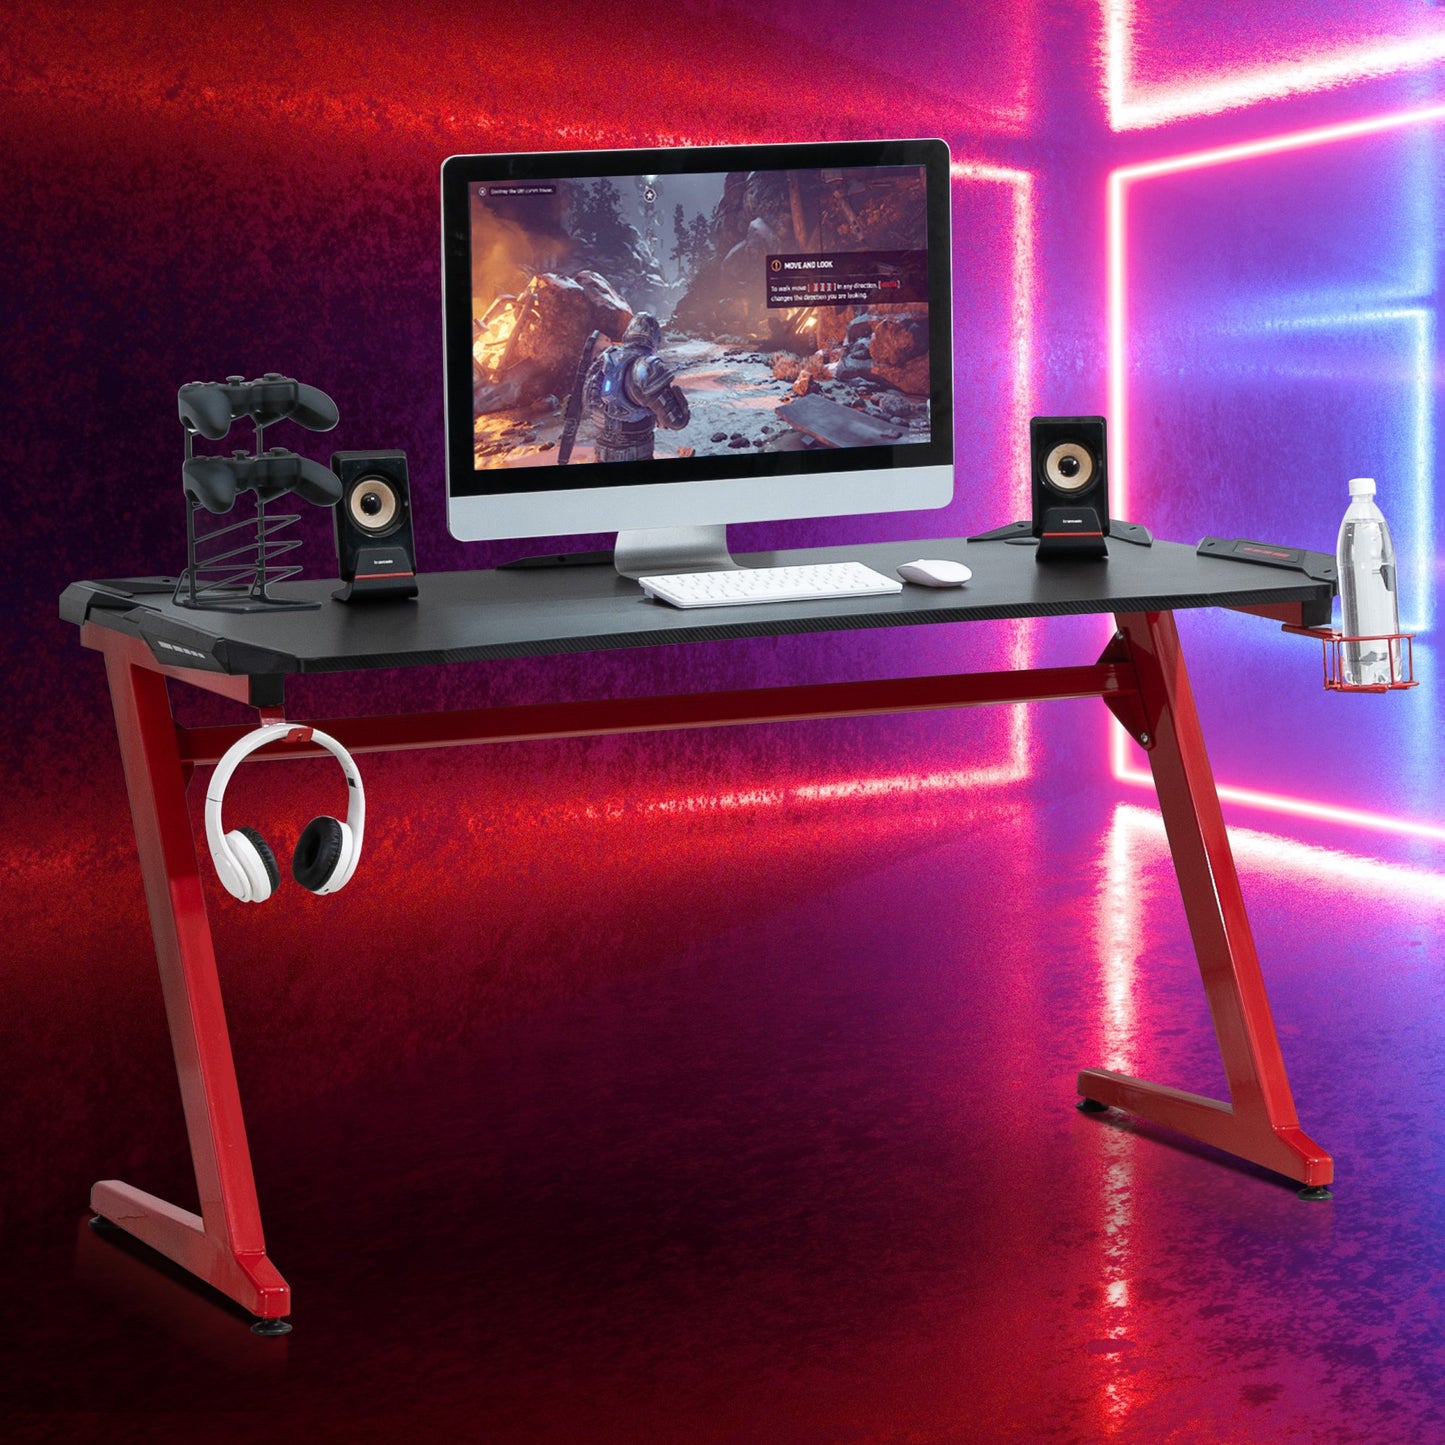 HOMCOM Computer Desk Gaming Desk Writing Table w/cup holder Headphone hook Red/Black